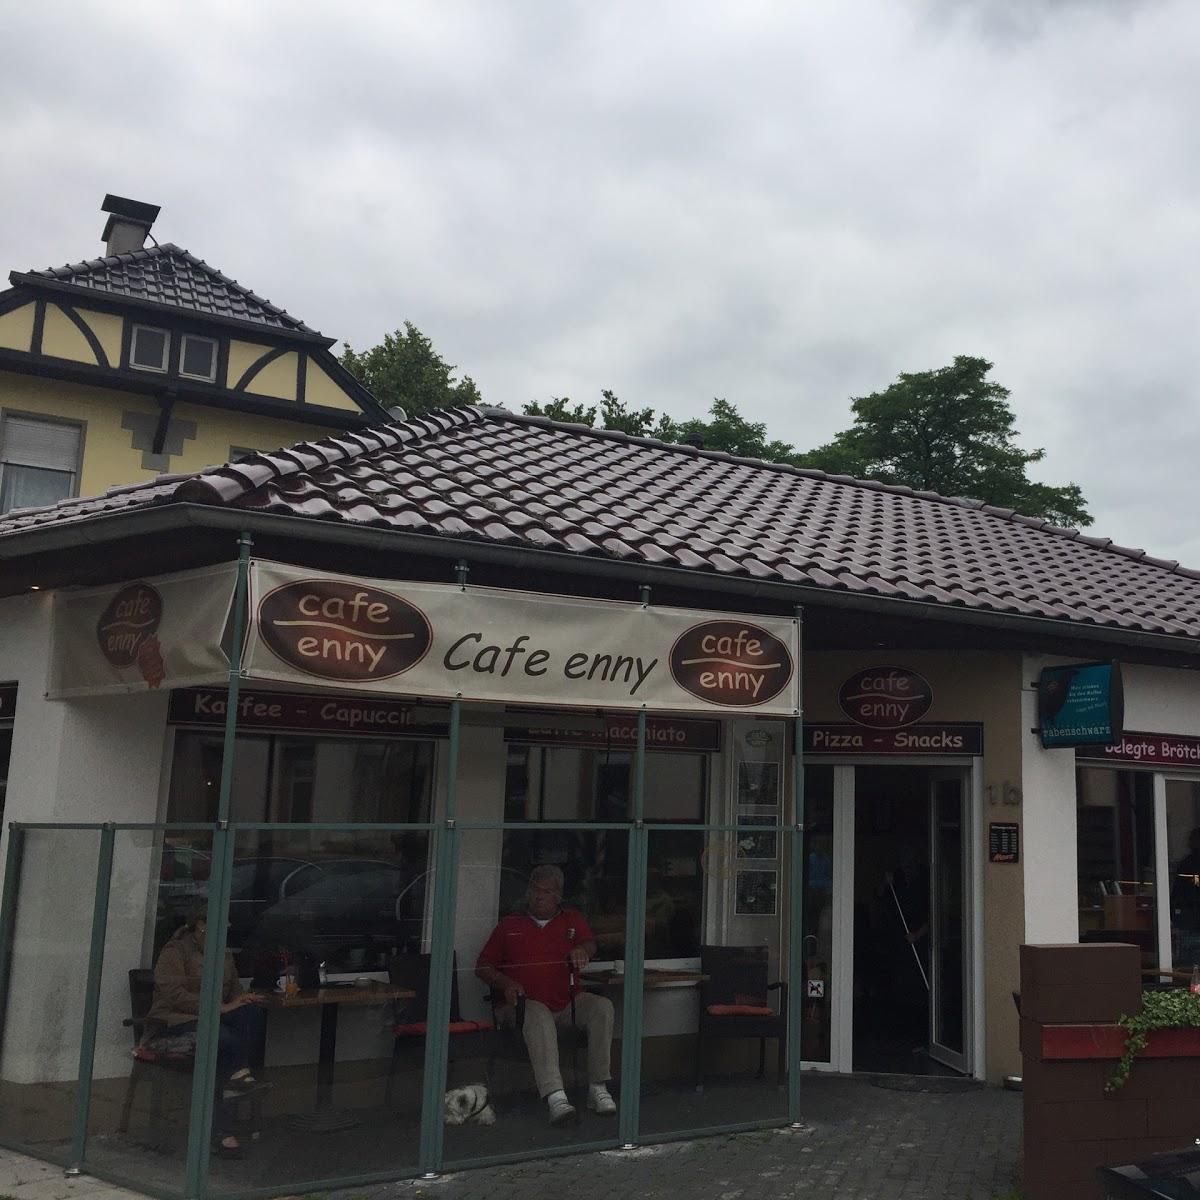 Restaurant "Cafe Enny" in Schwelm